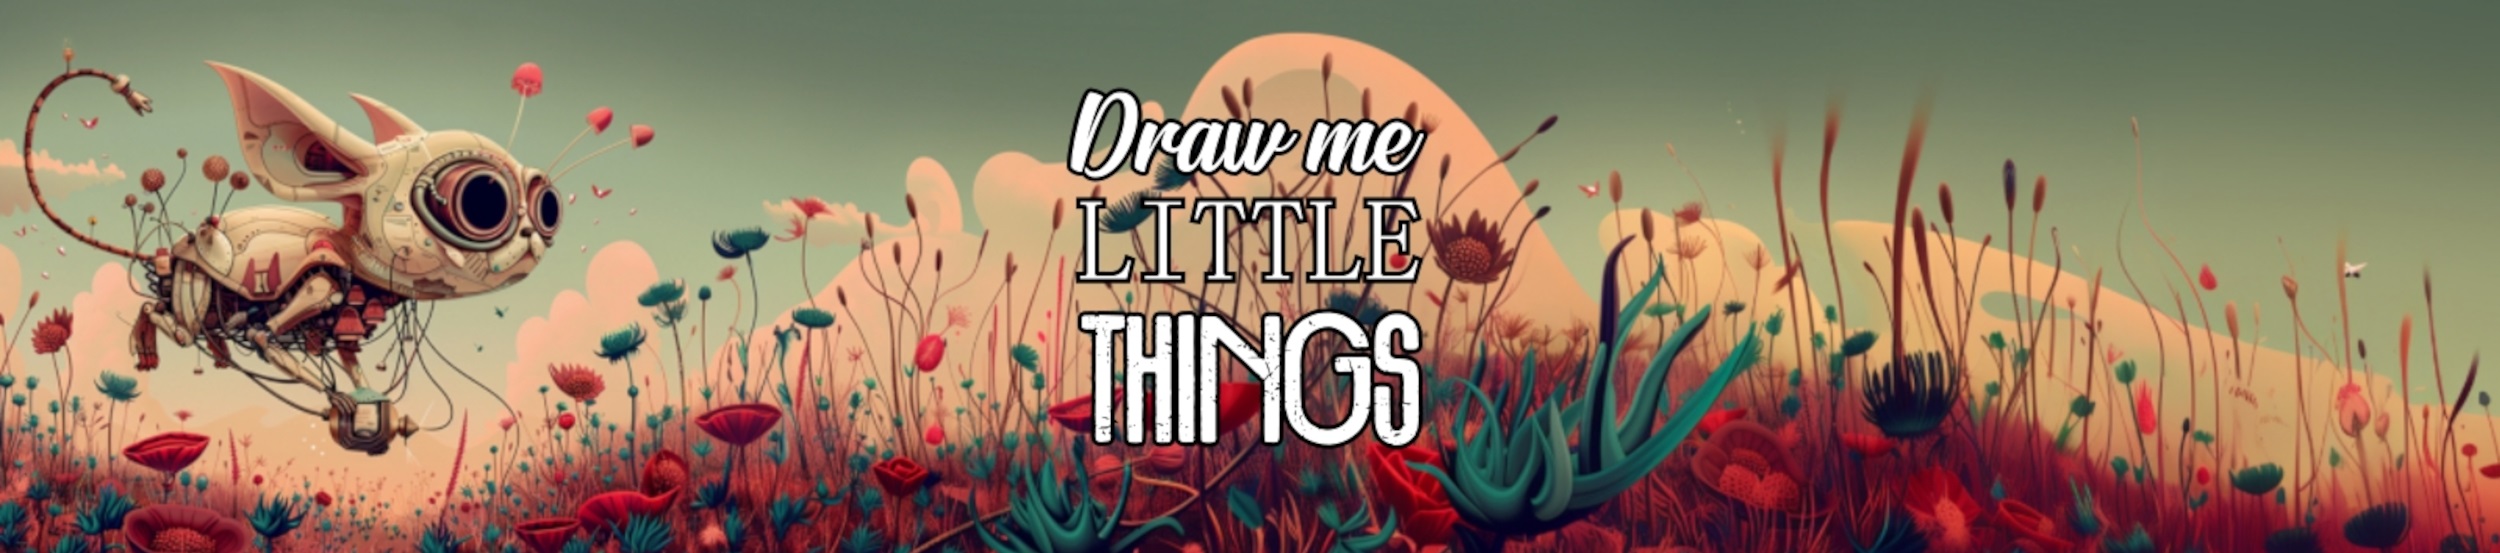 Draw me things